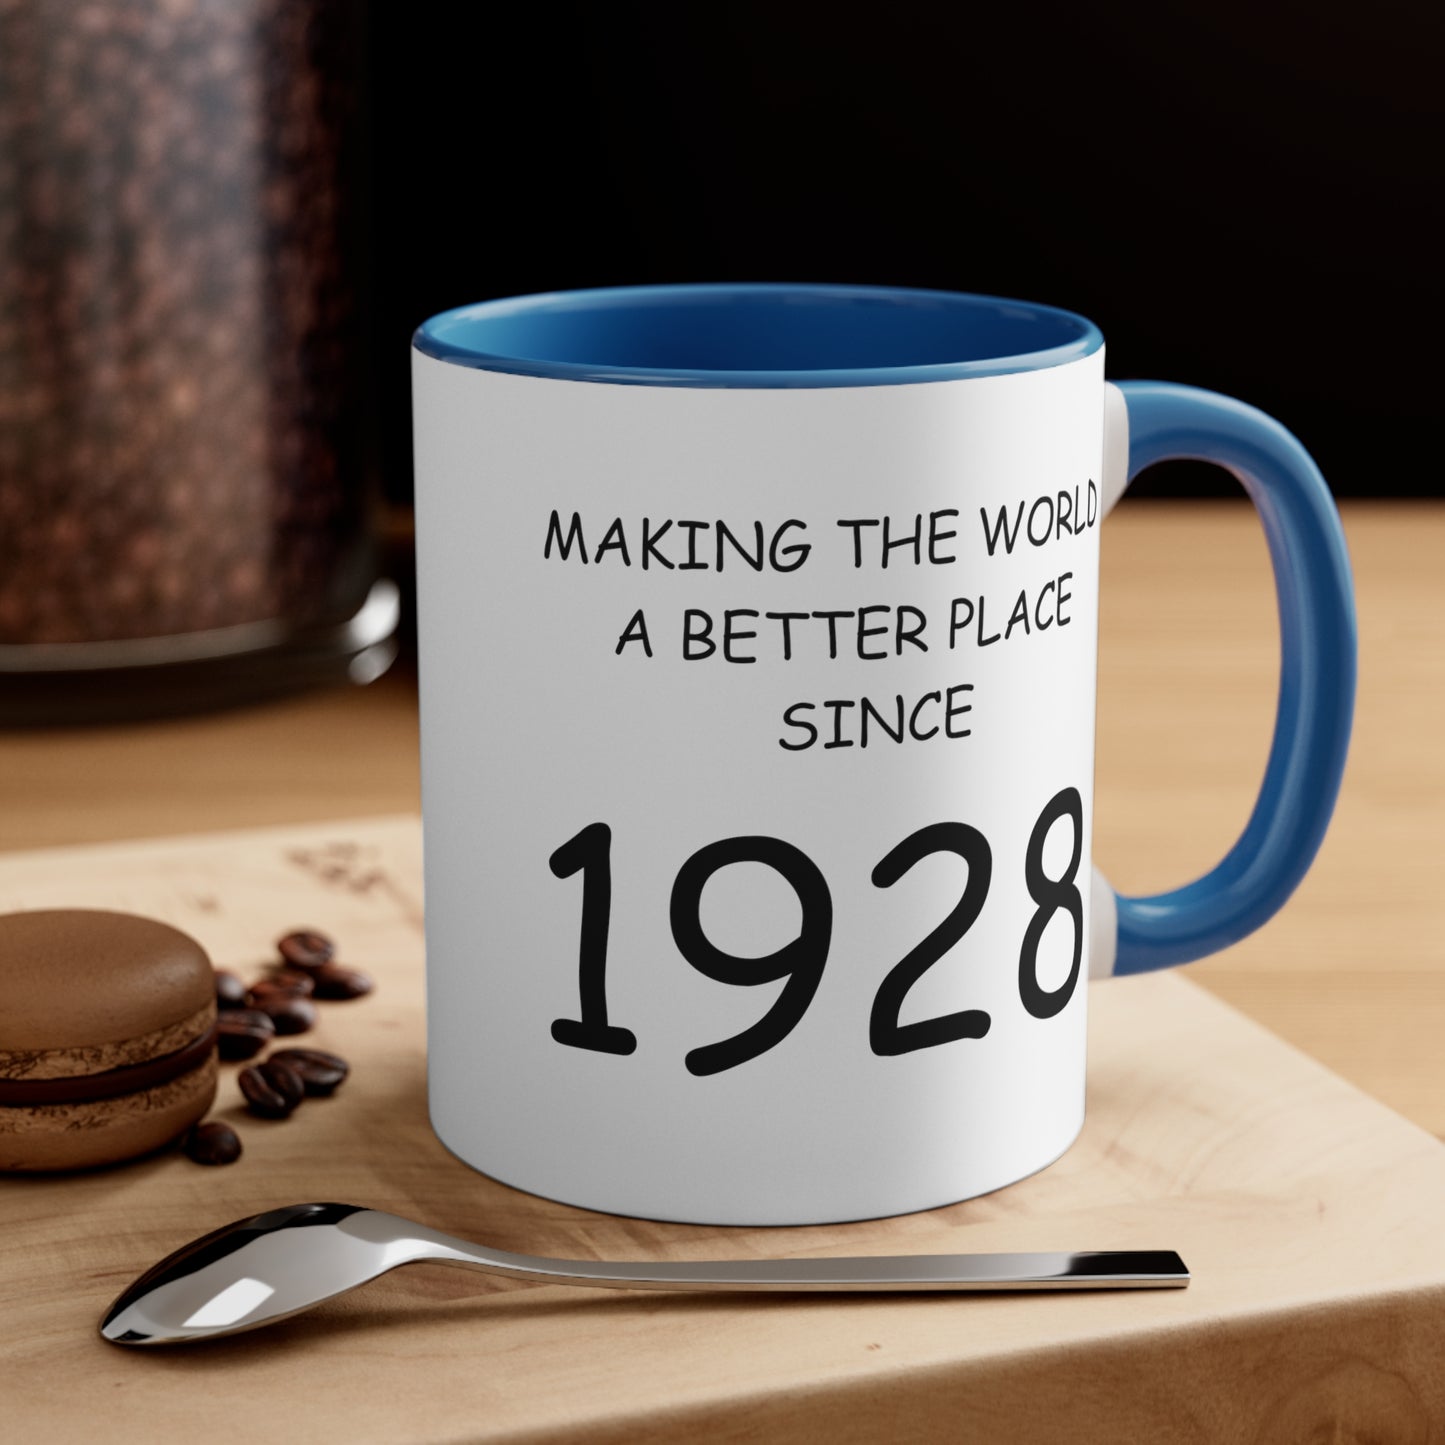 Making World Better Place Since 1928, Accent Coffee Mug, 11oz